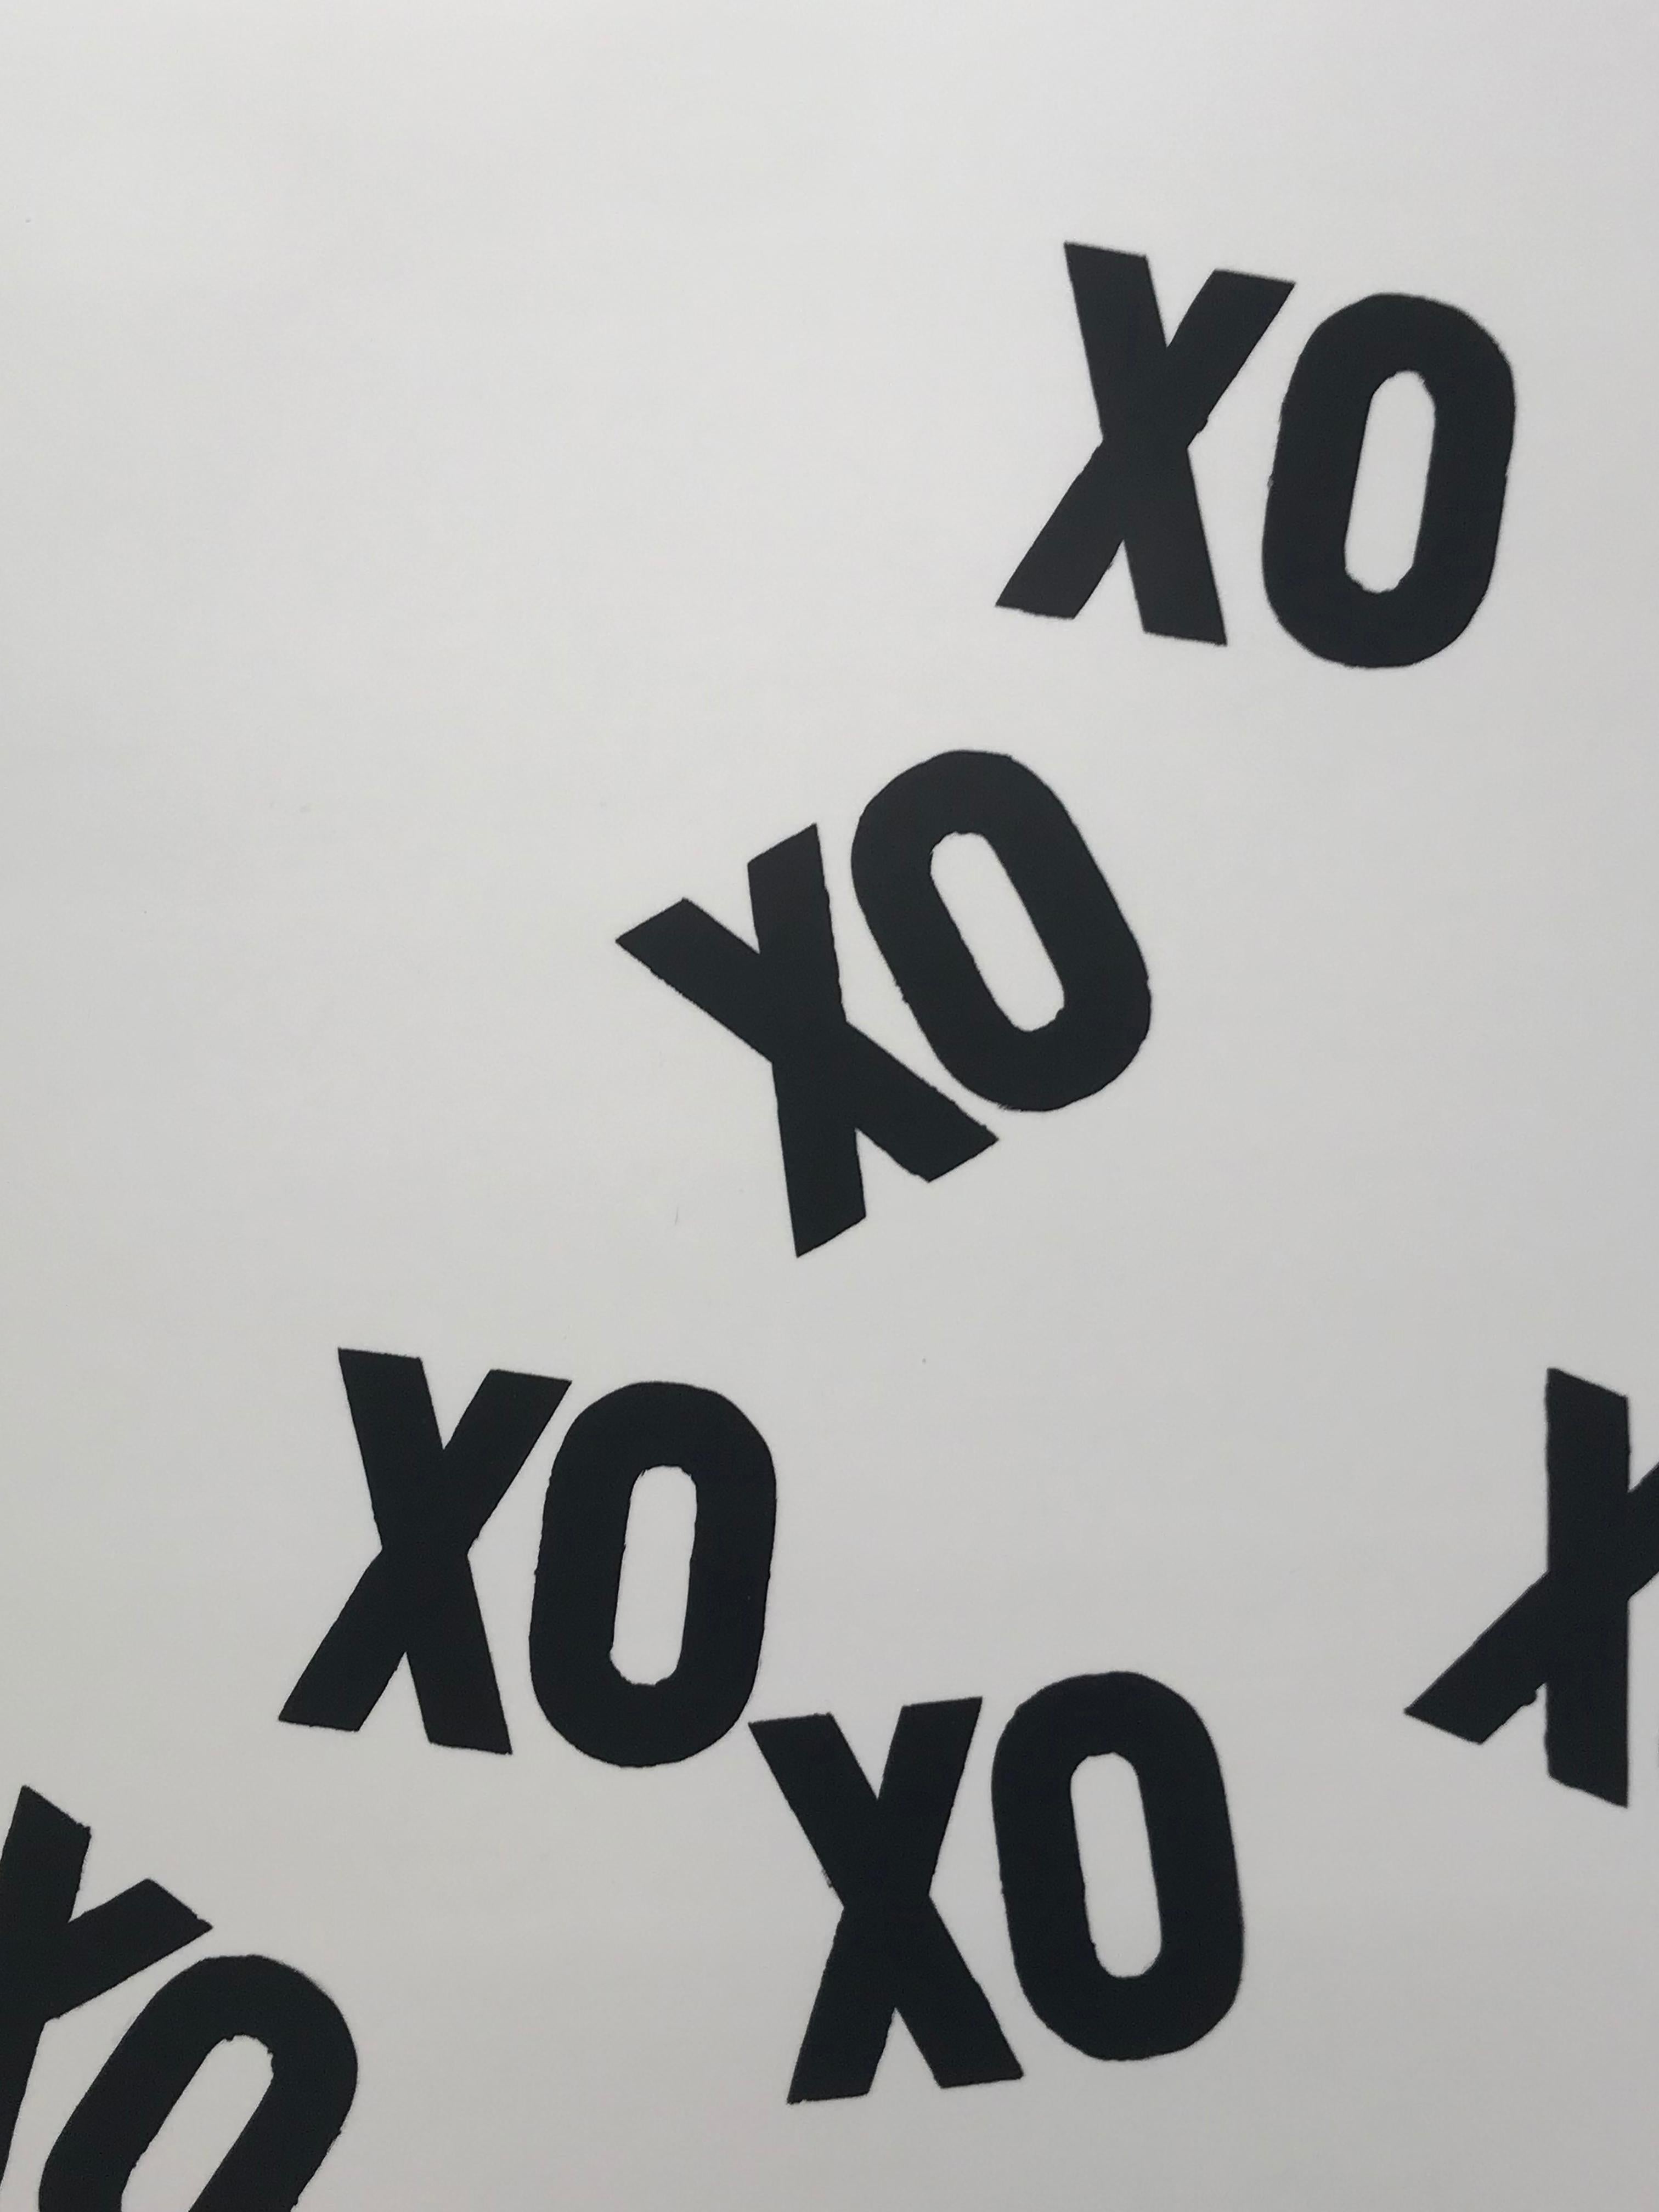 Matthew Heller 
Falling, XO, Hugs, Kisses, Small, Canvas, Painting, Black, White, Text, Acrylic
Acrylic on canvas
24 x 20
2019